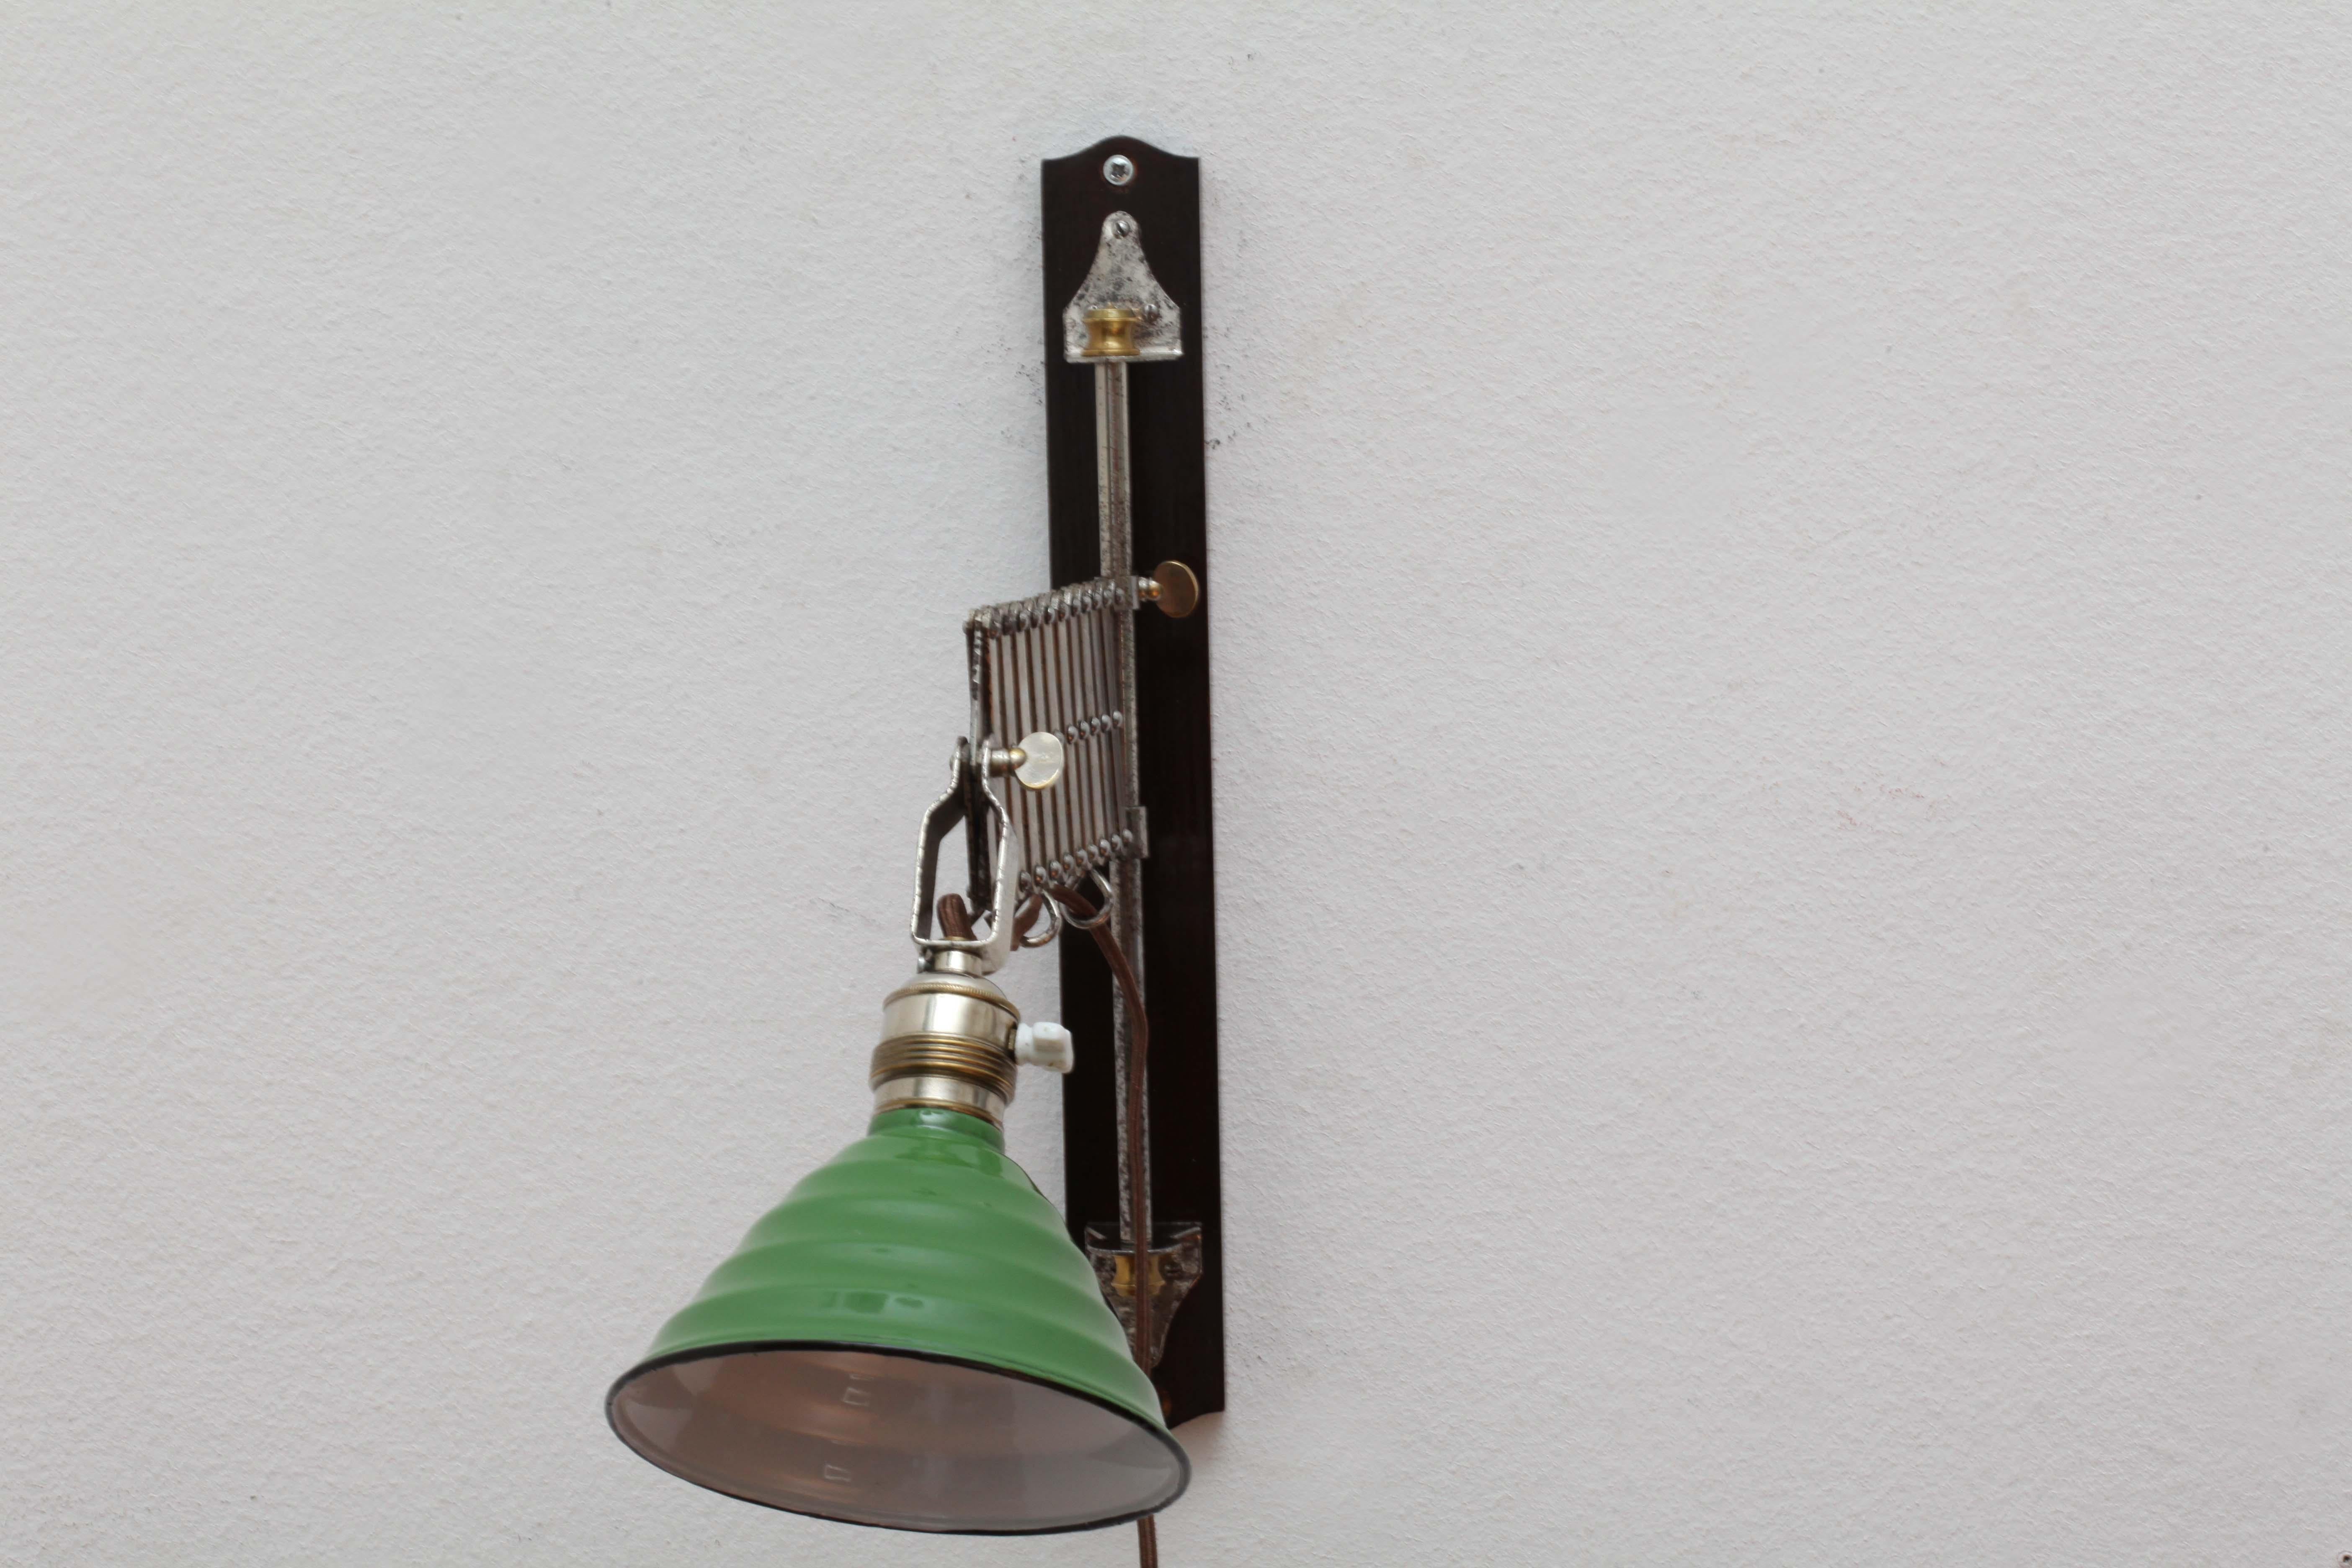 Austrian Industrial Design Wall Lamp, Vienna, 1950